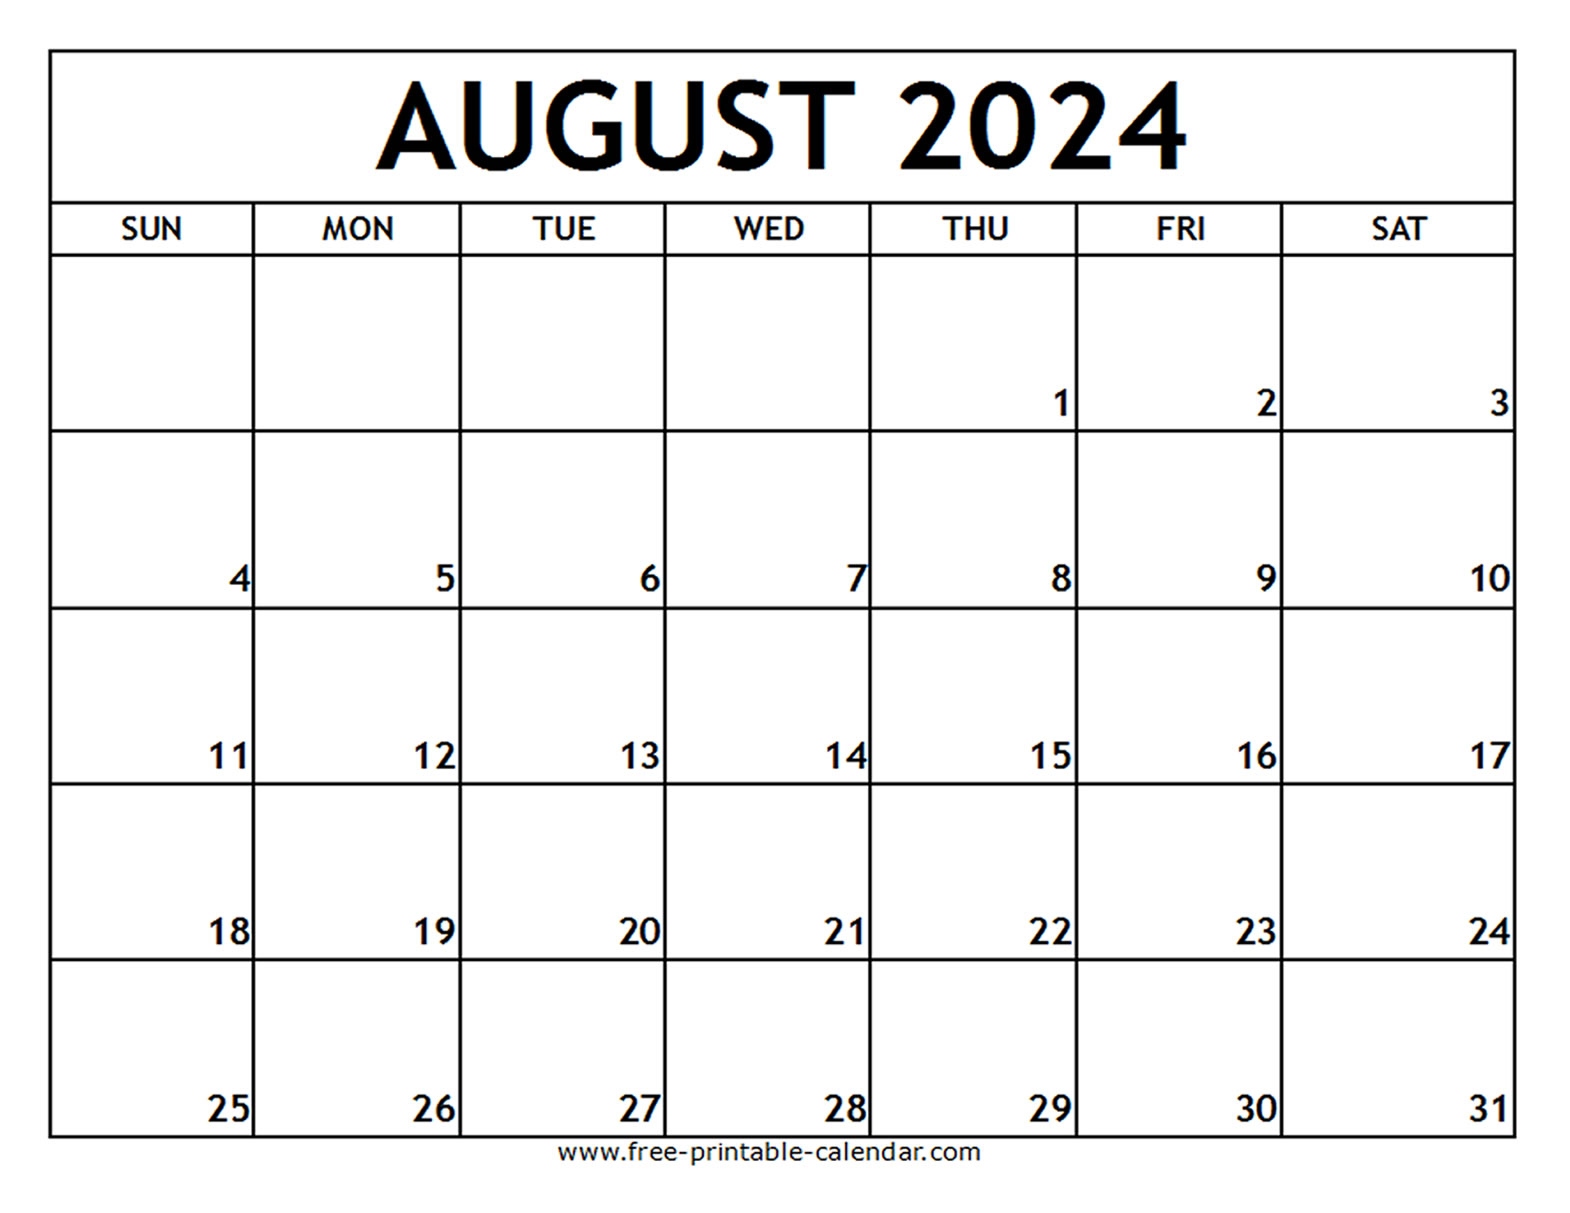 August 2024 Printable Calendar - Free-Printable-Calendar throughout Free Printable Blank Calendar August 2024